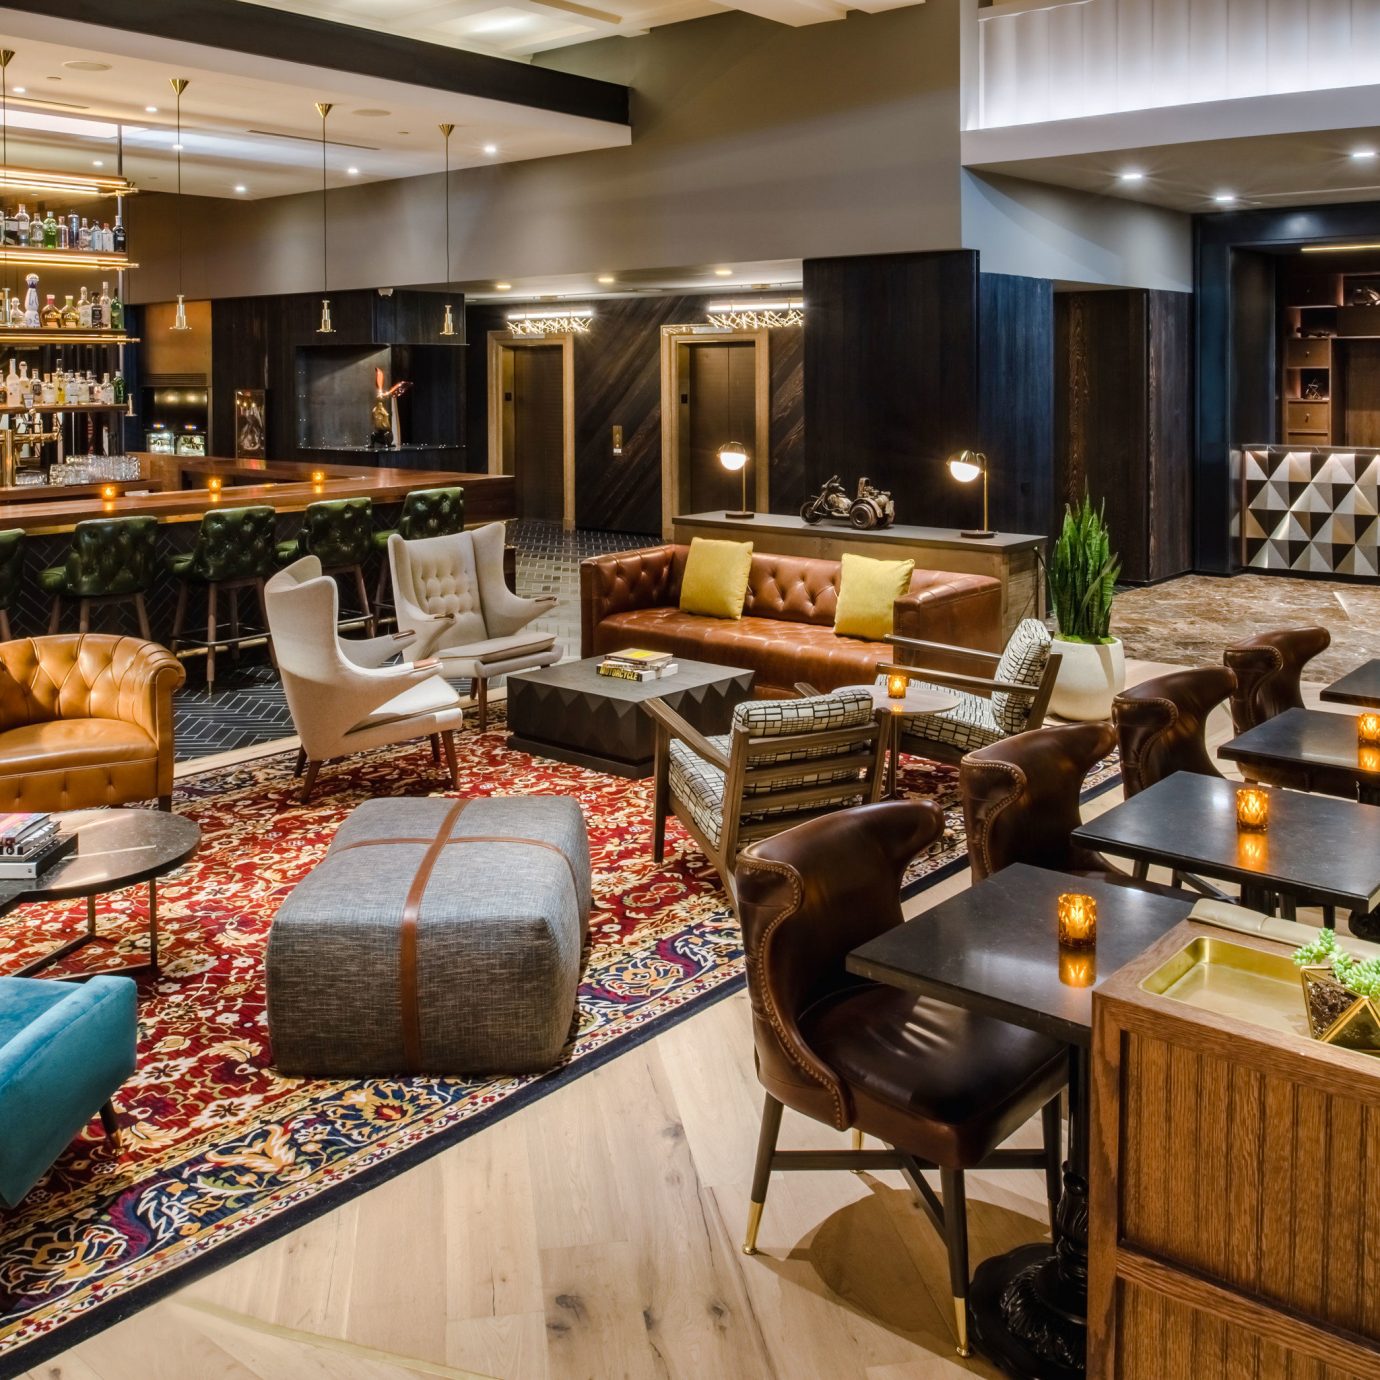 Boutique Hotels Hotels Luxury Travel table indoor ceiling Lobby interior design restaurant furniture